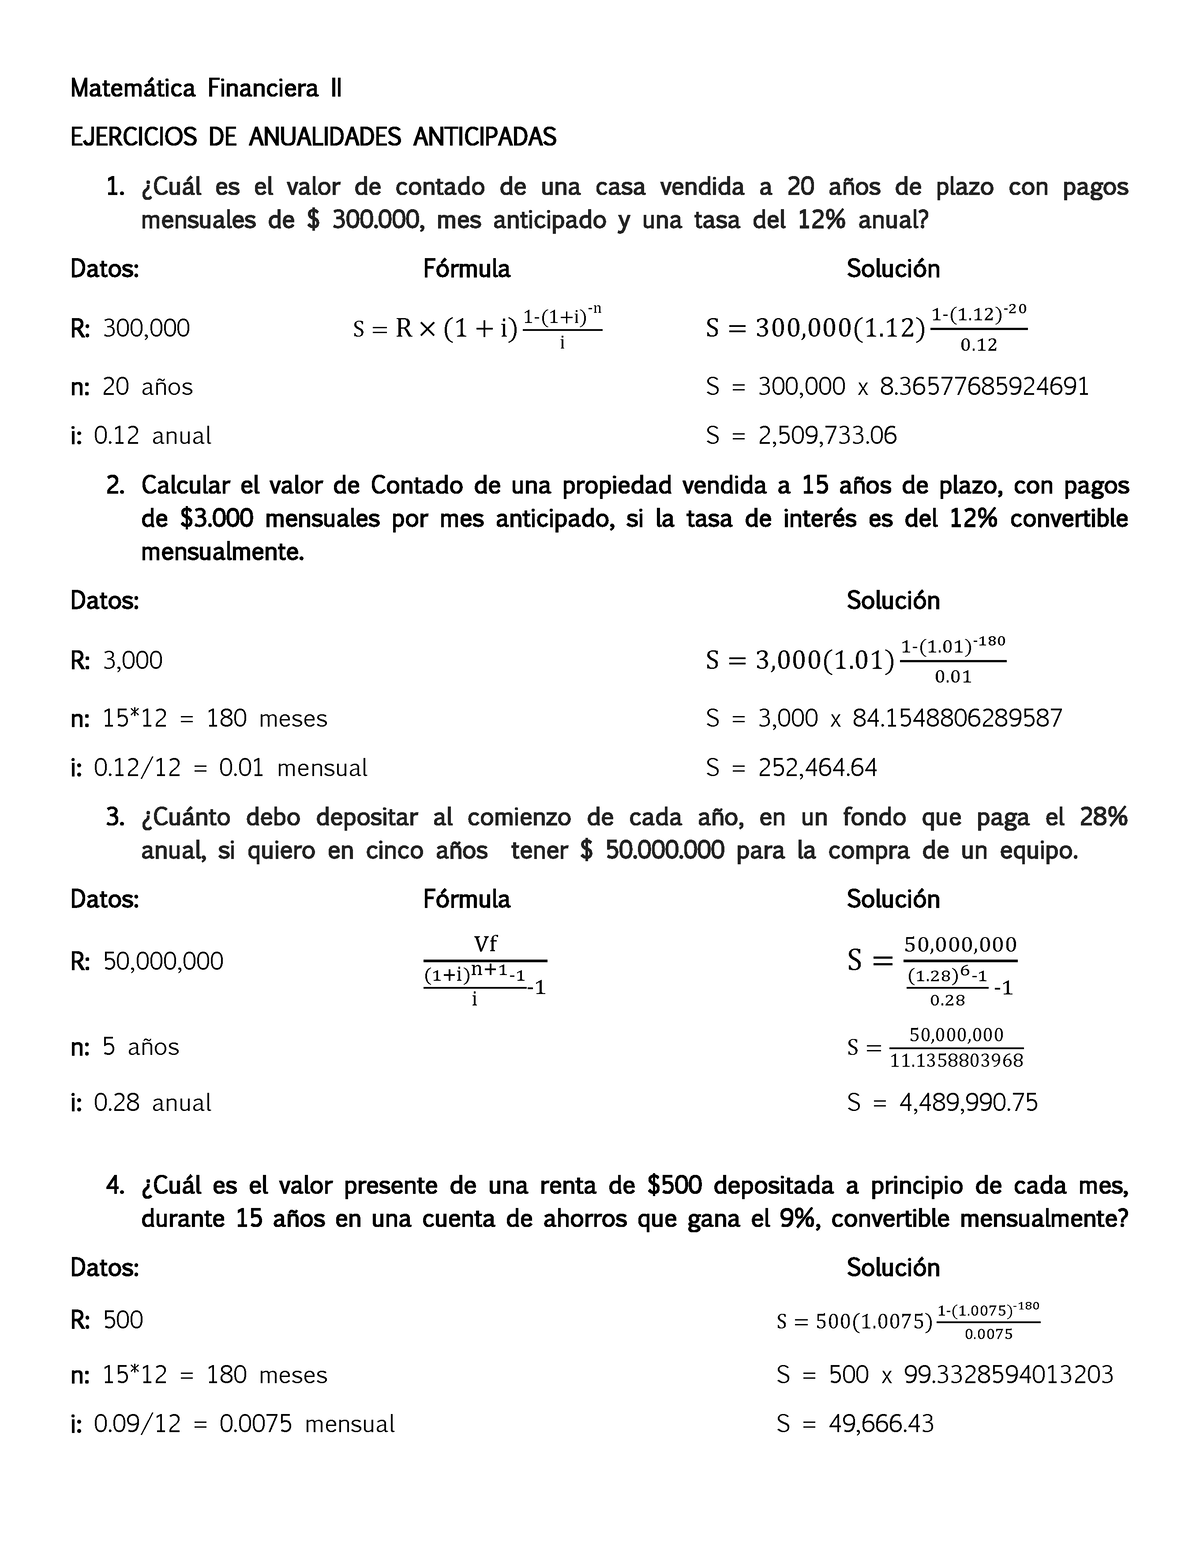 Anualidades Ejercicios Anualidades Matematica Financi 5651